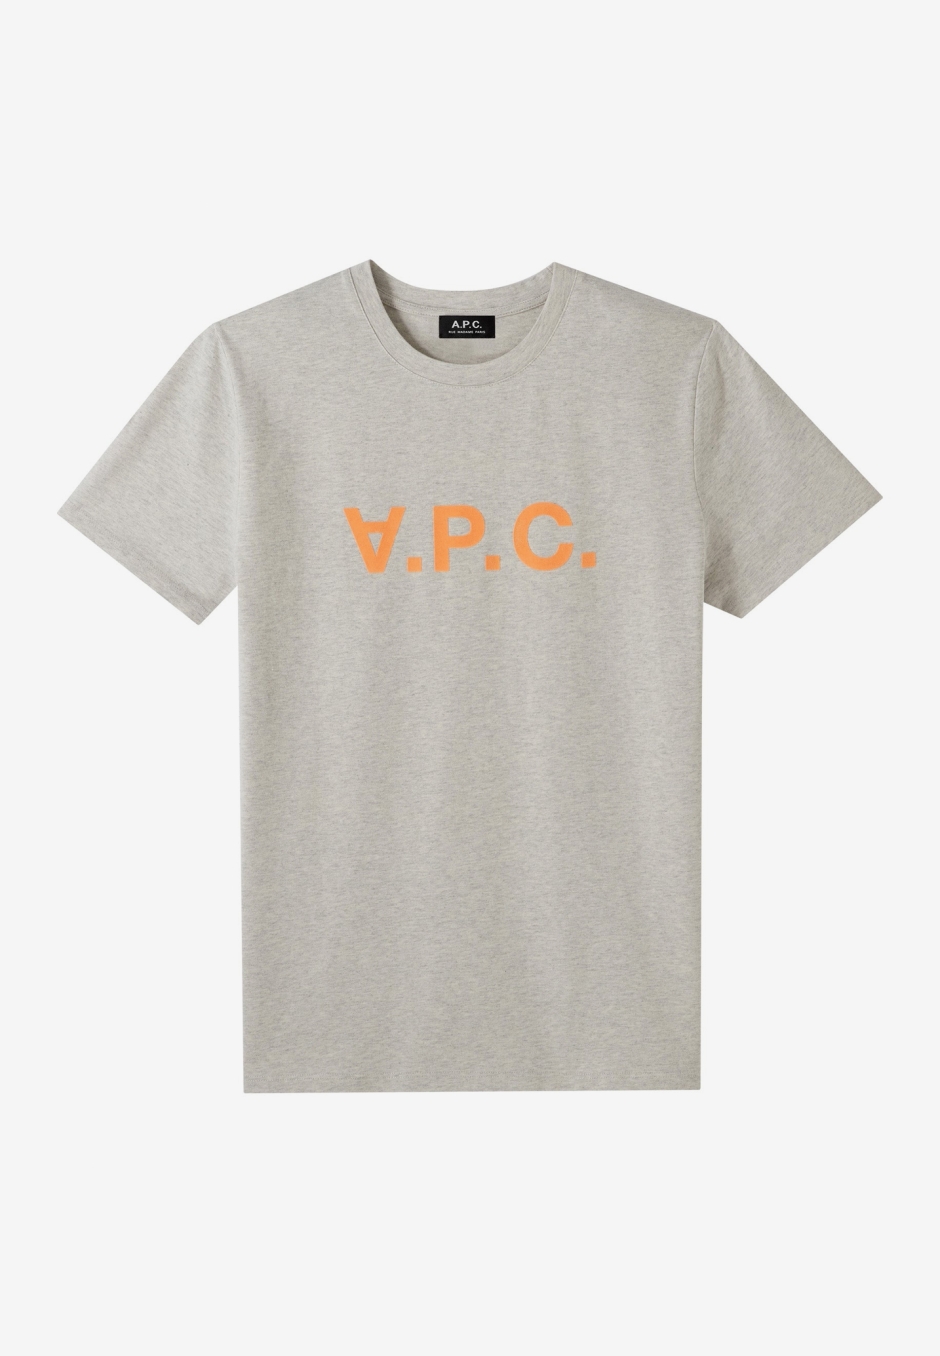 A.P.C. VPC Bicolor T-shirt